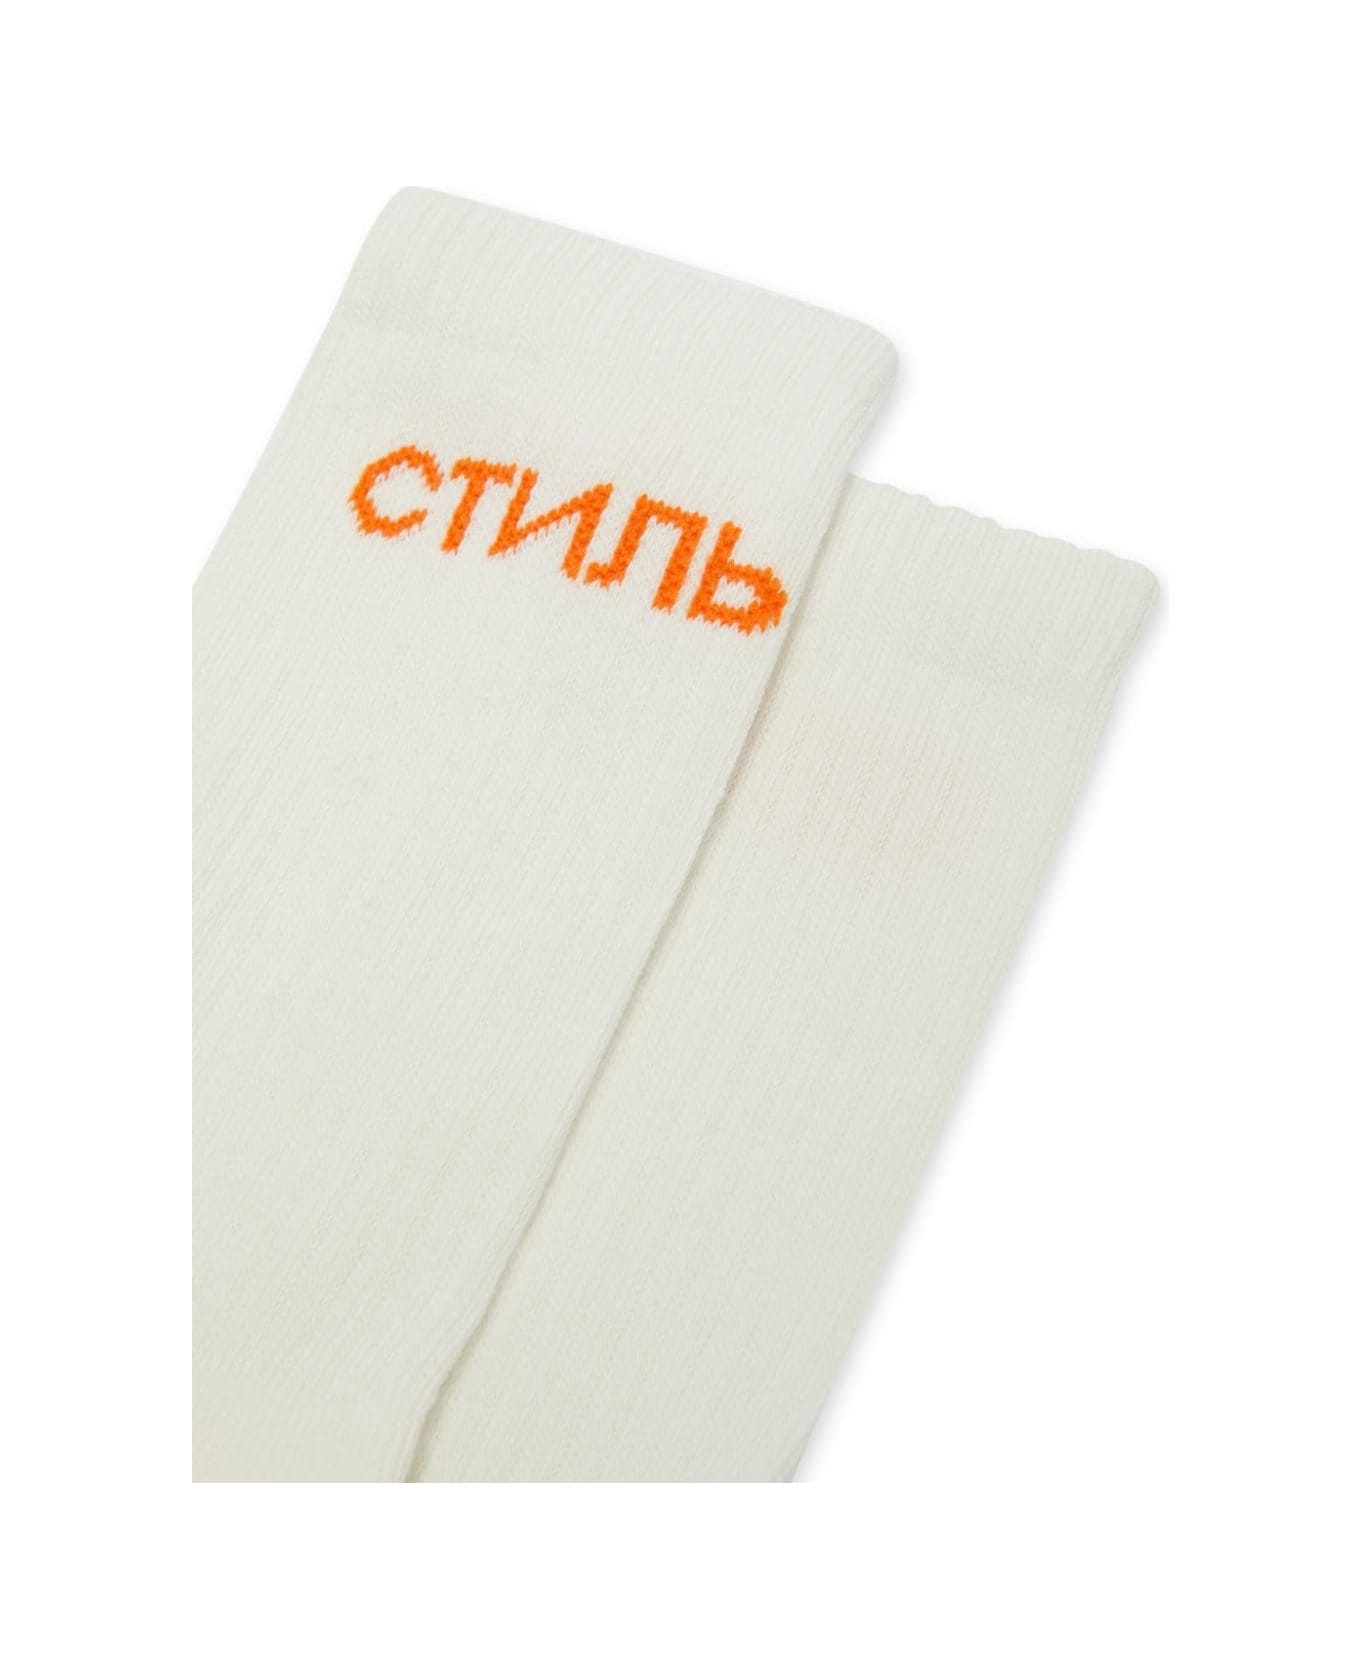 HERON PRESTON Ctnmb Long Socks White Orange - White